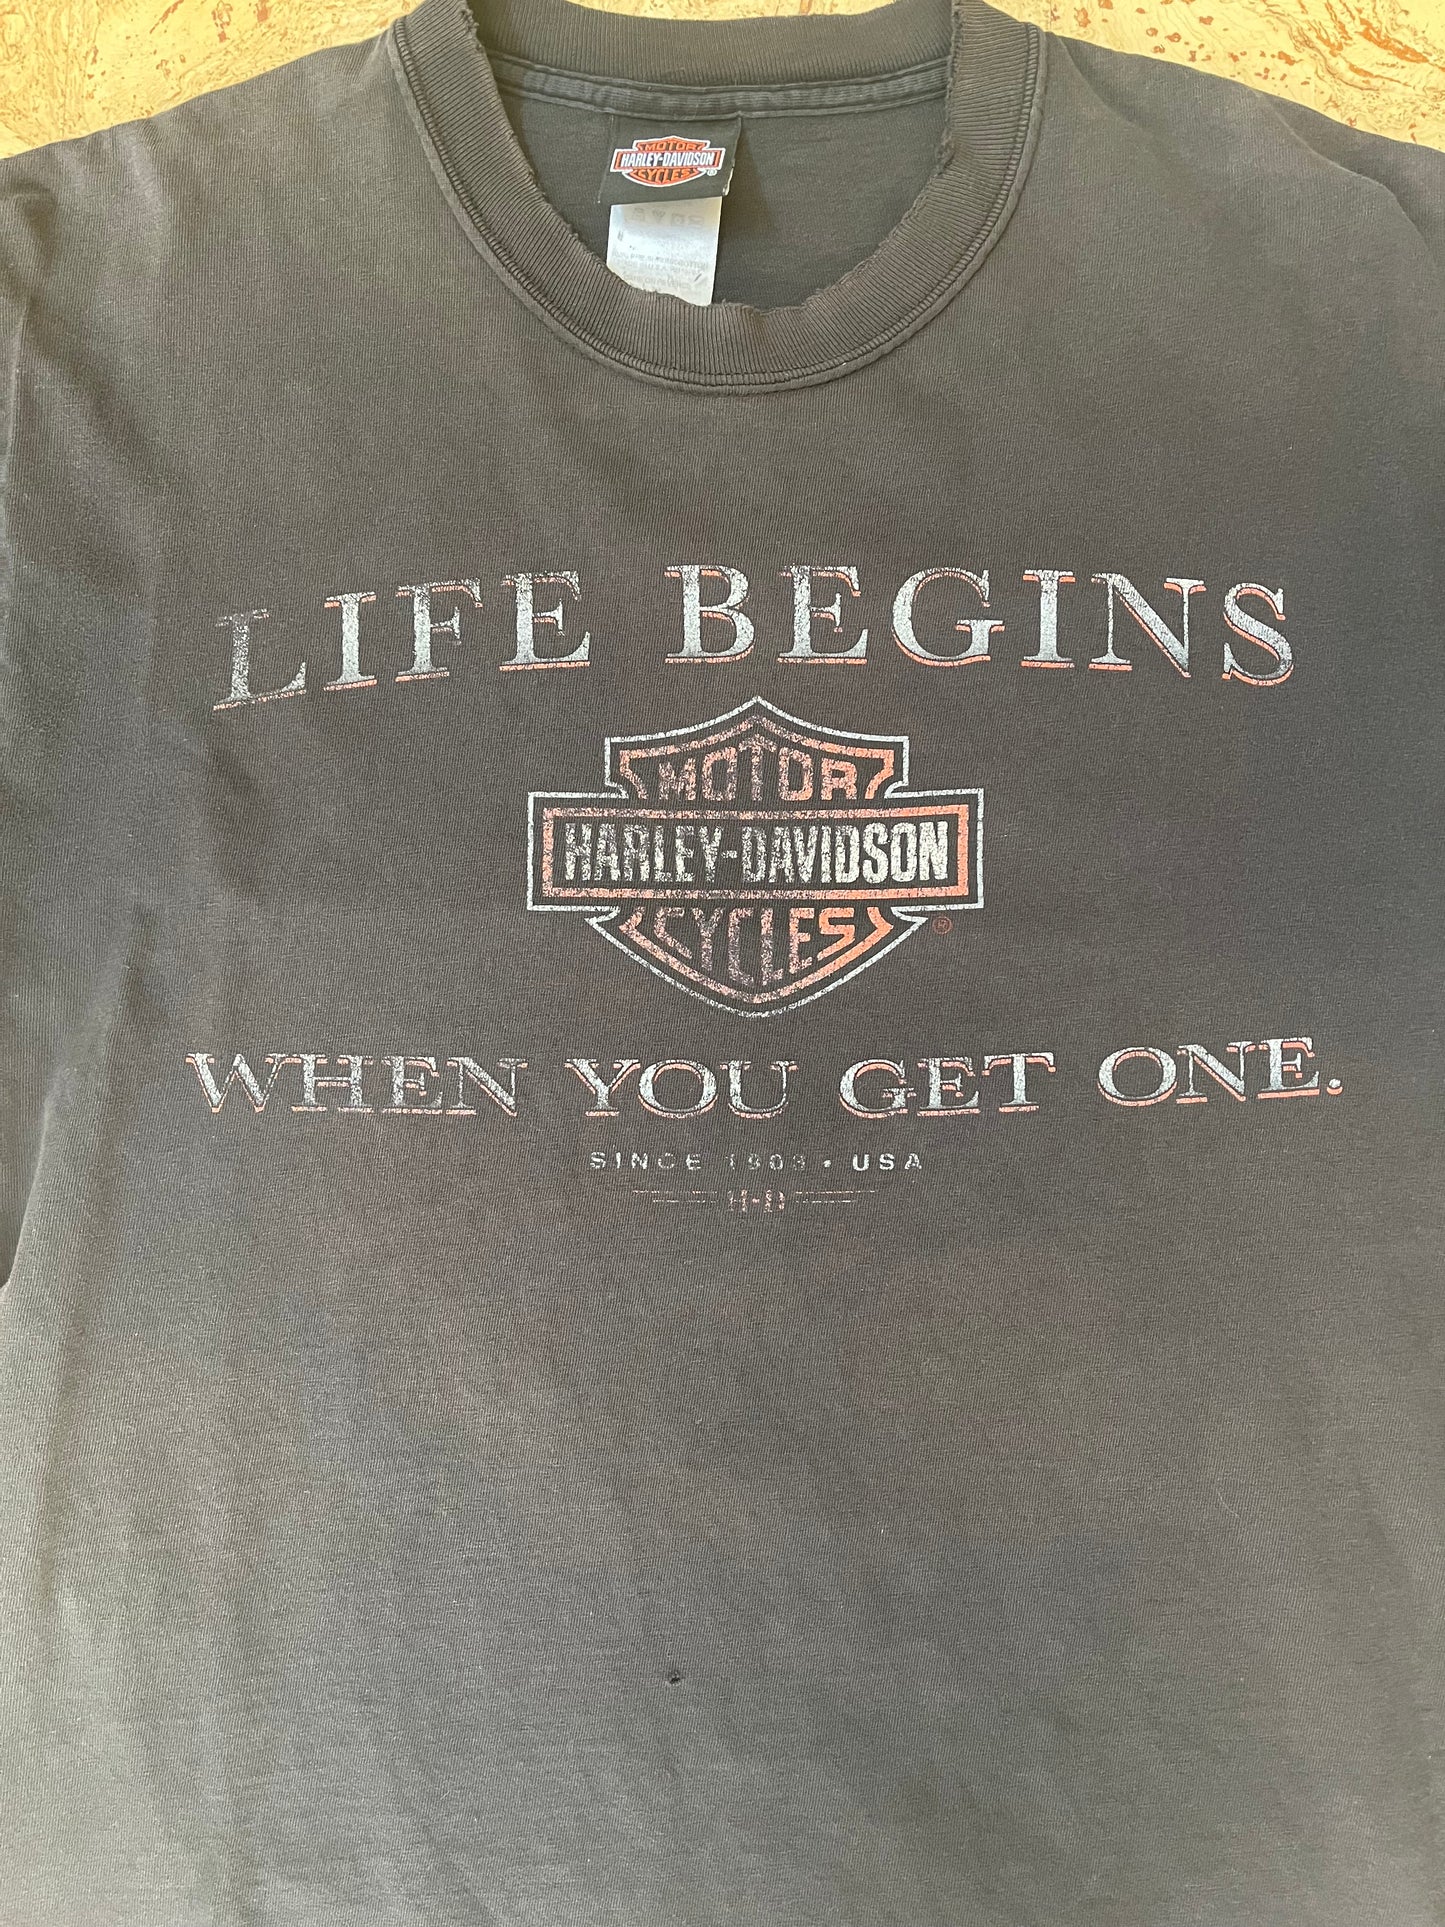 2000s Harley Life Begins Distressed T-Shirt